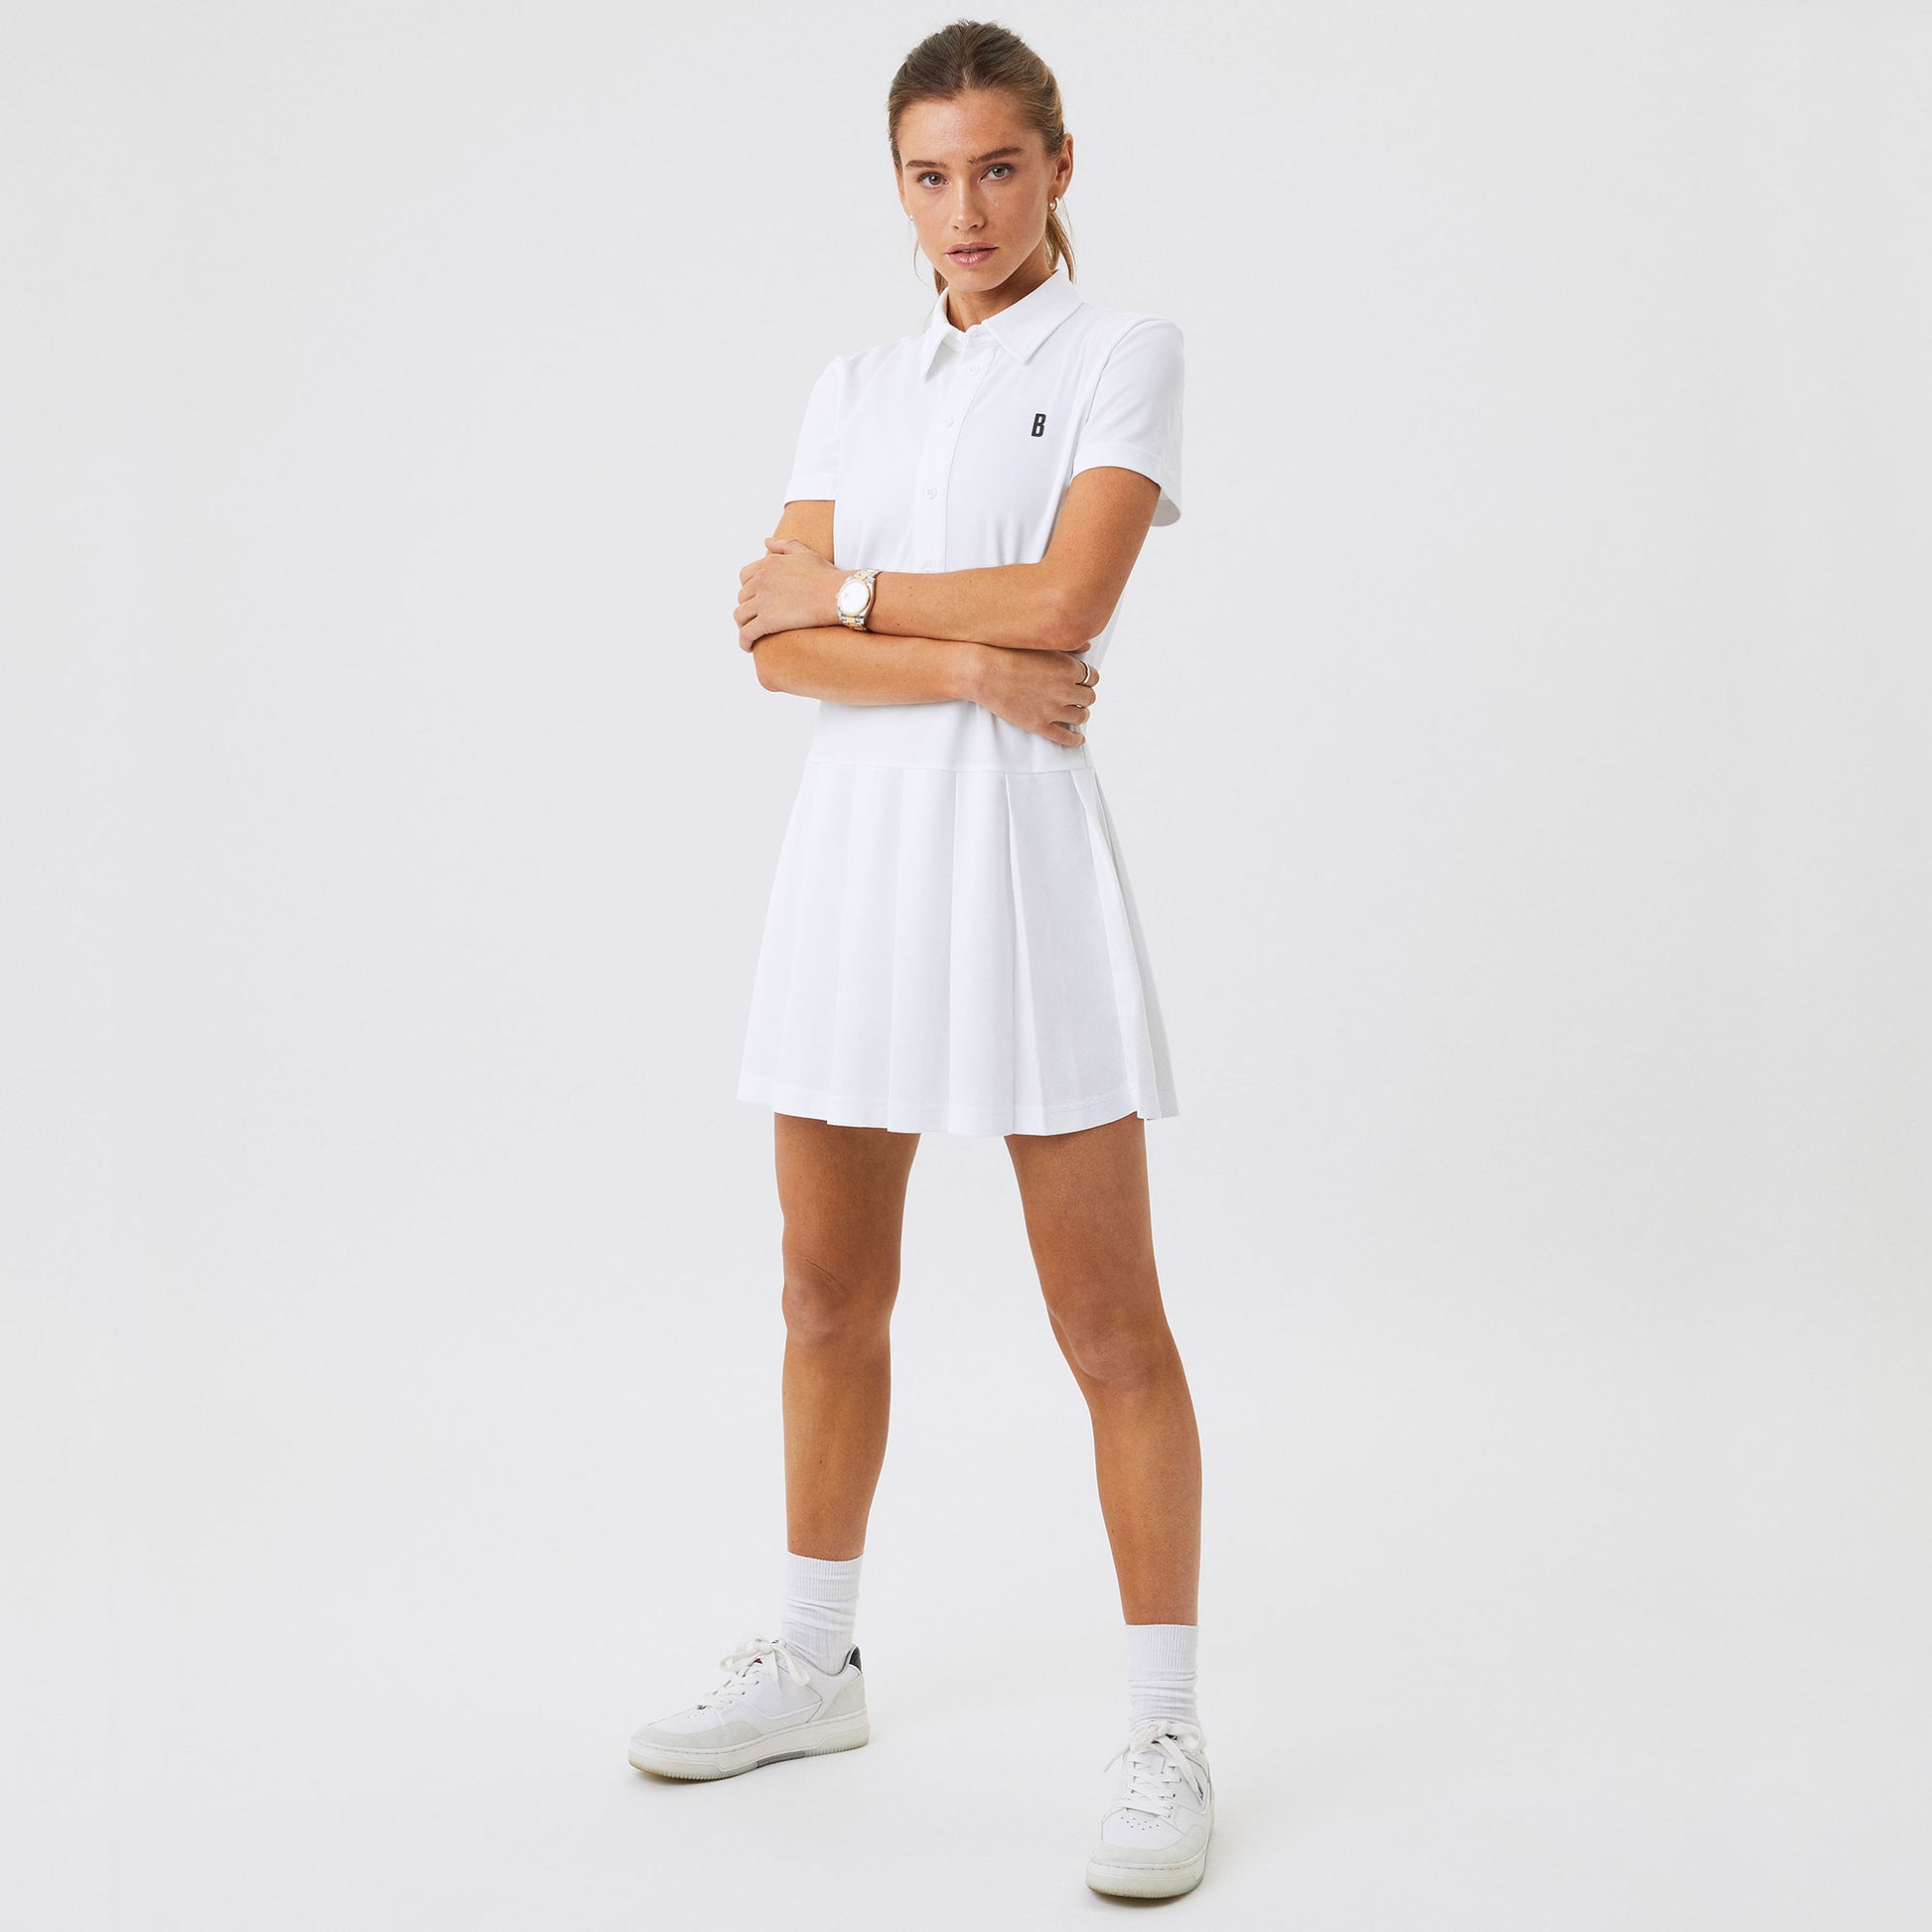 Björn Borg Ace Women's Tennis Polo Dress White (4)